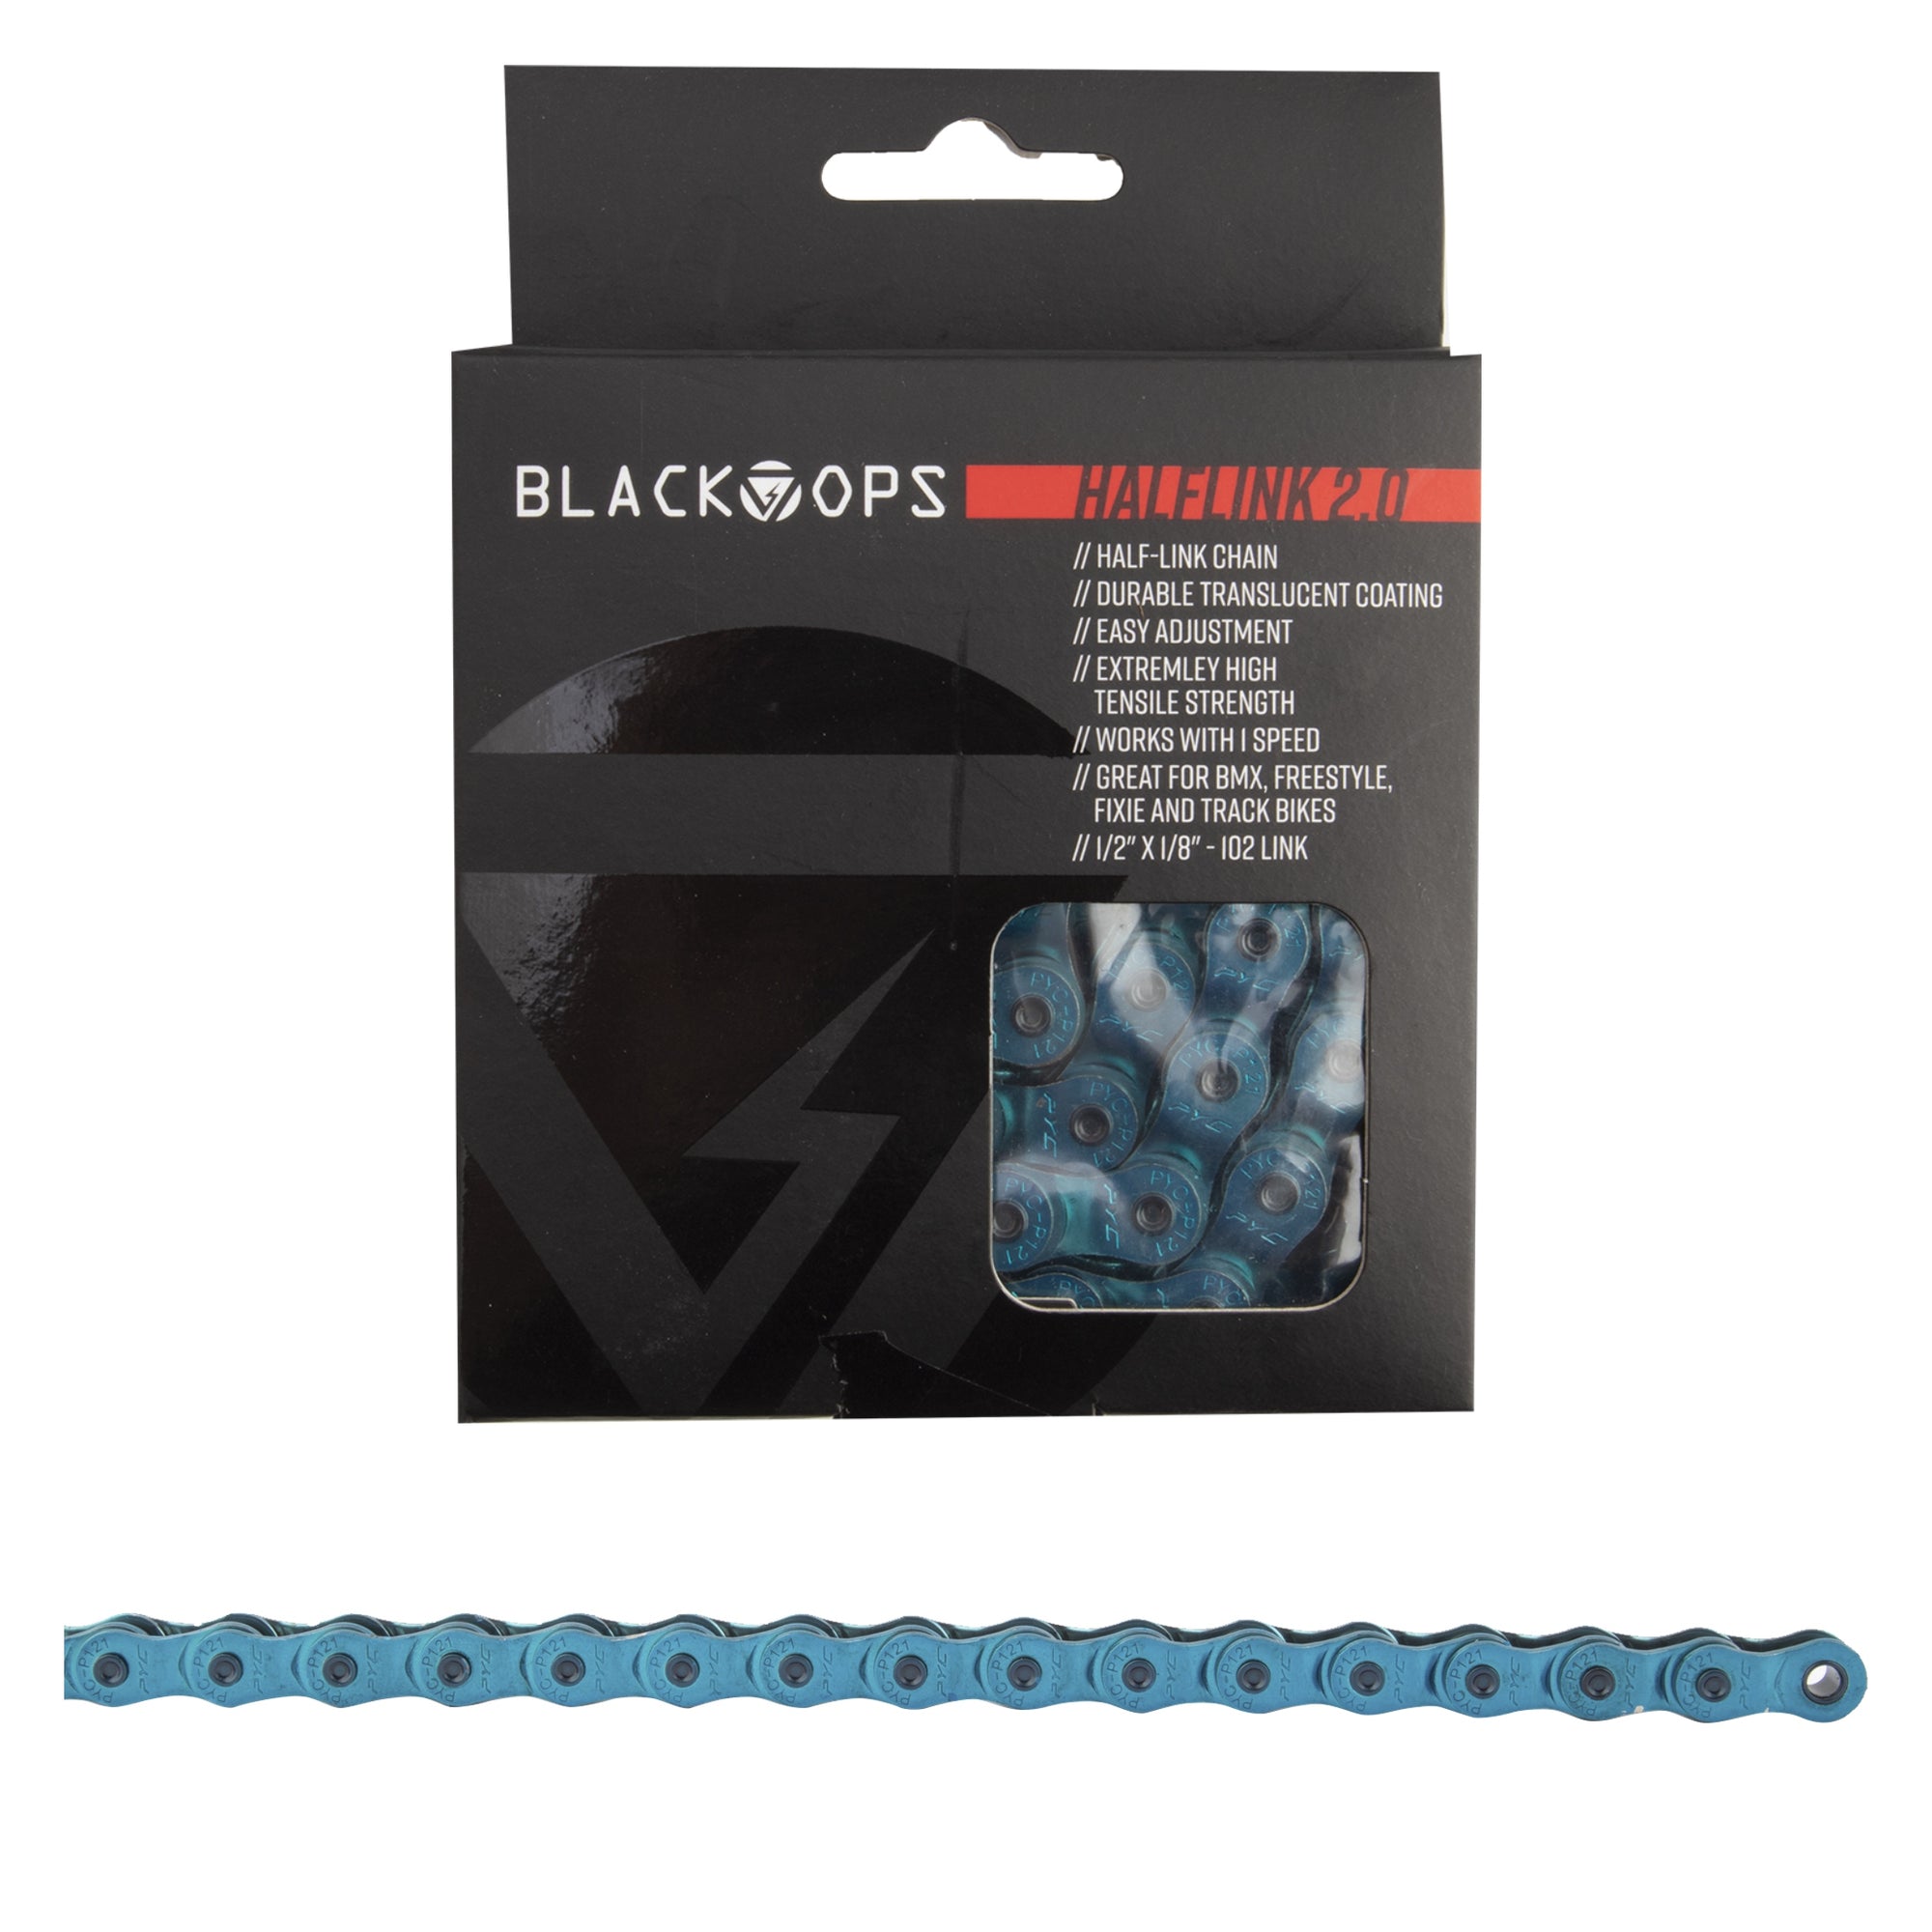 BlackOps HalfLink 2.0 Half-link Chain - Trans Blue - 1/2"x1/8"